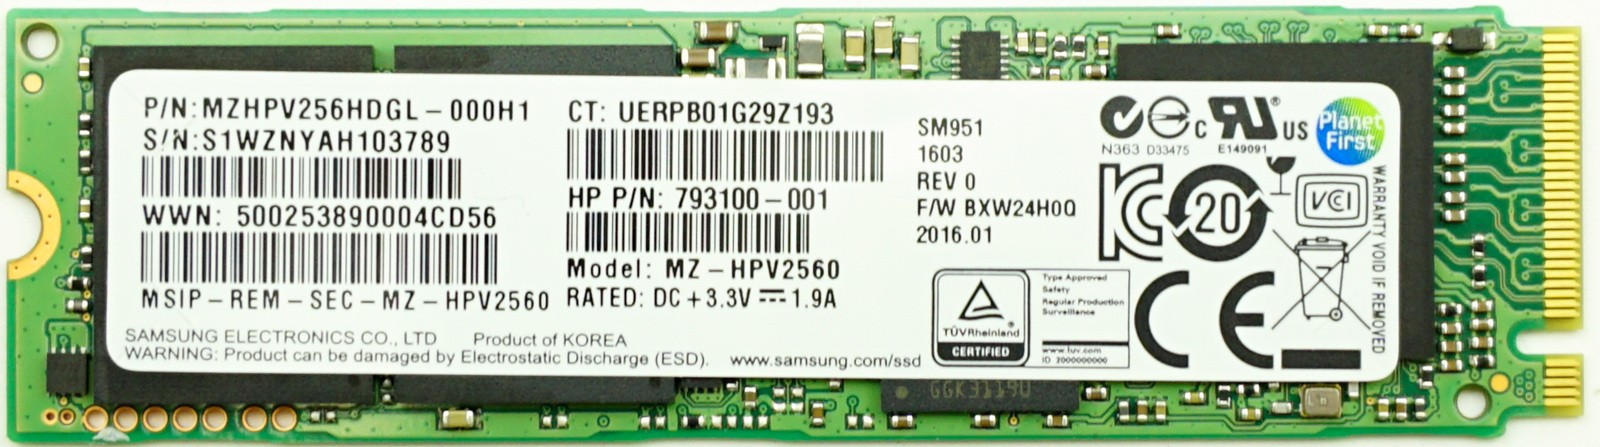 HP (793100-001) 256GB NVMe (M.2 2280) SSD